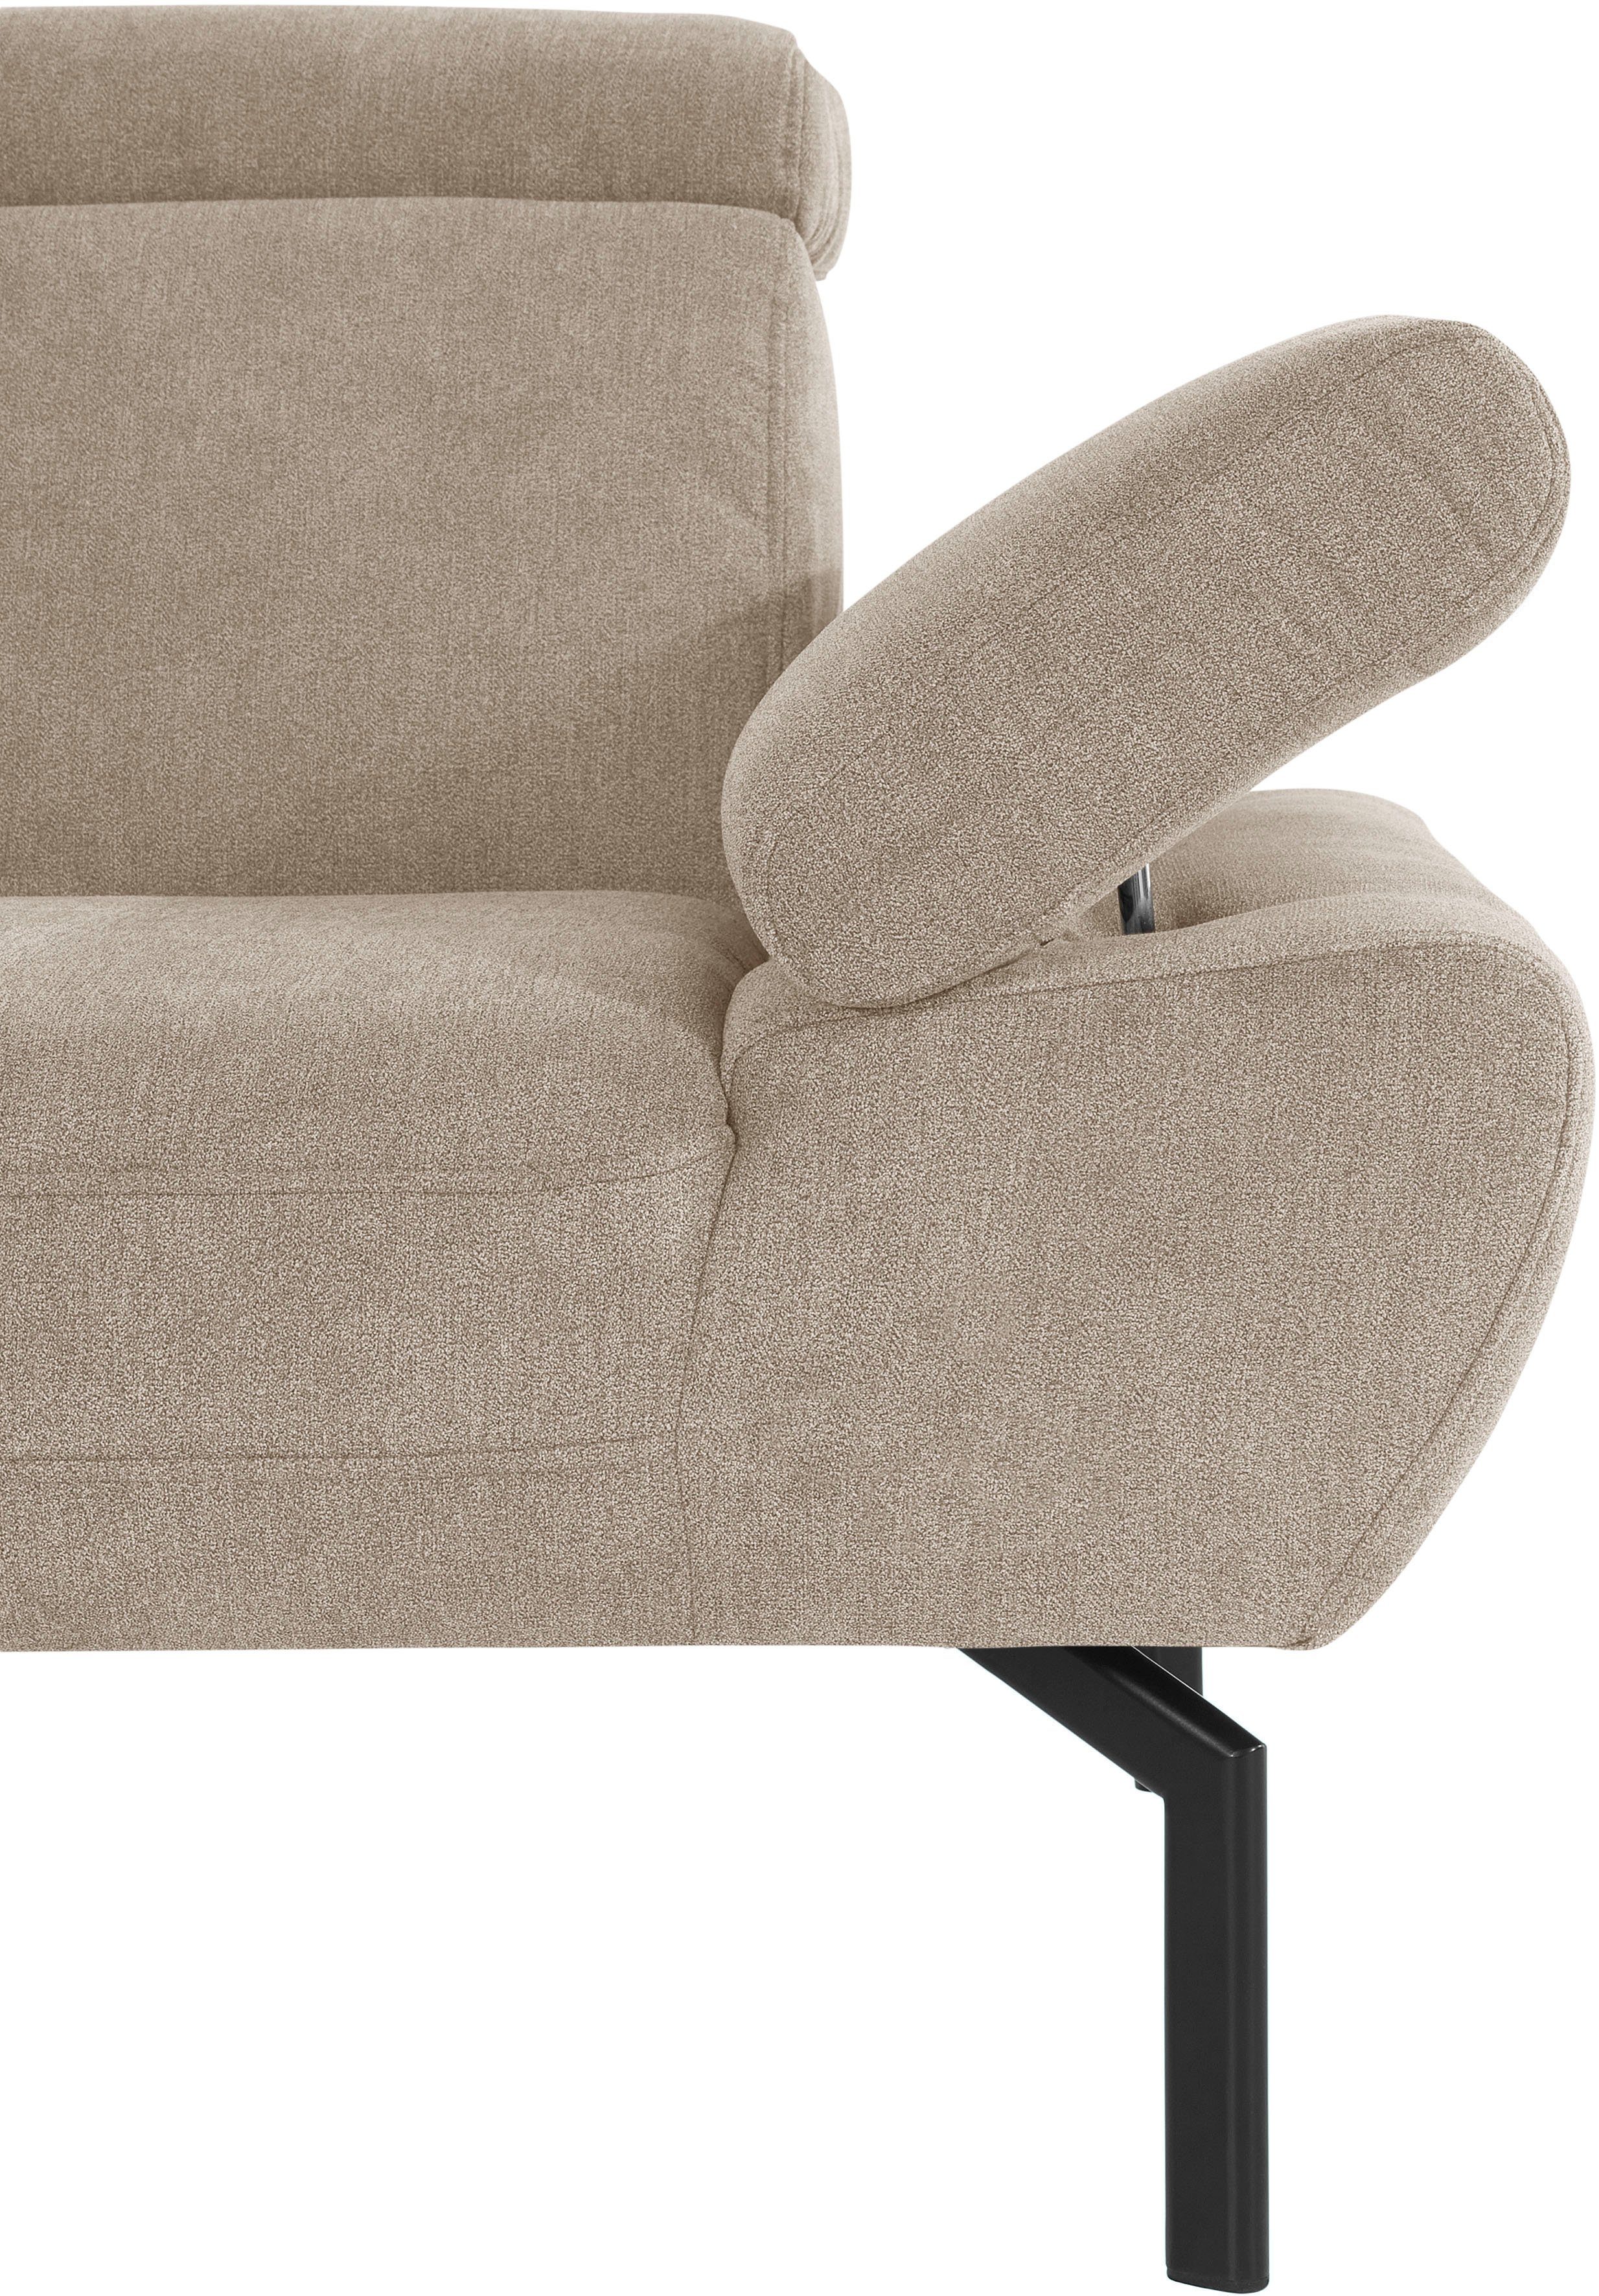 mit of Rückenverstellung, Lederoptik Sessel Luxus-Microfaser Luxus, Places Trapino Style wahlweise in